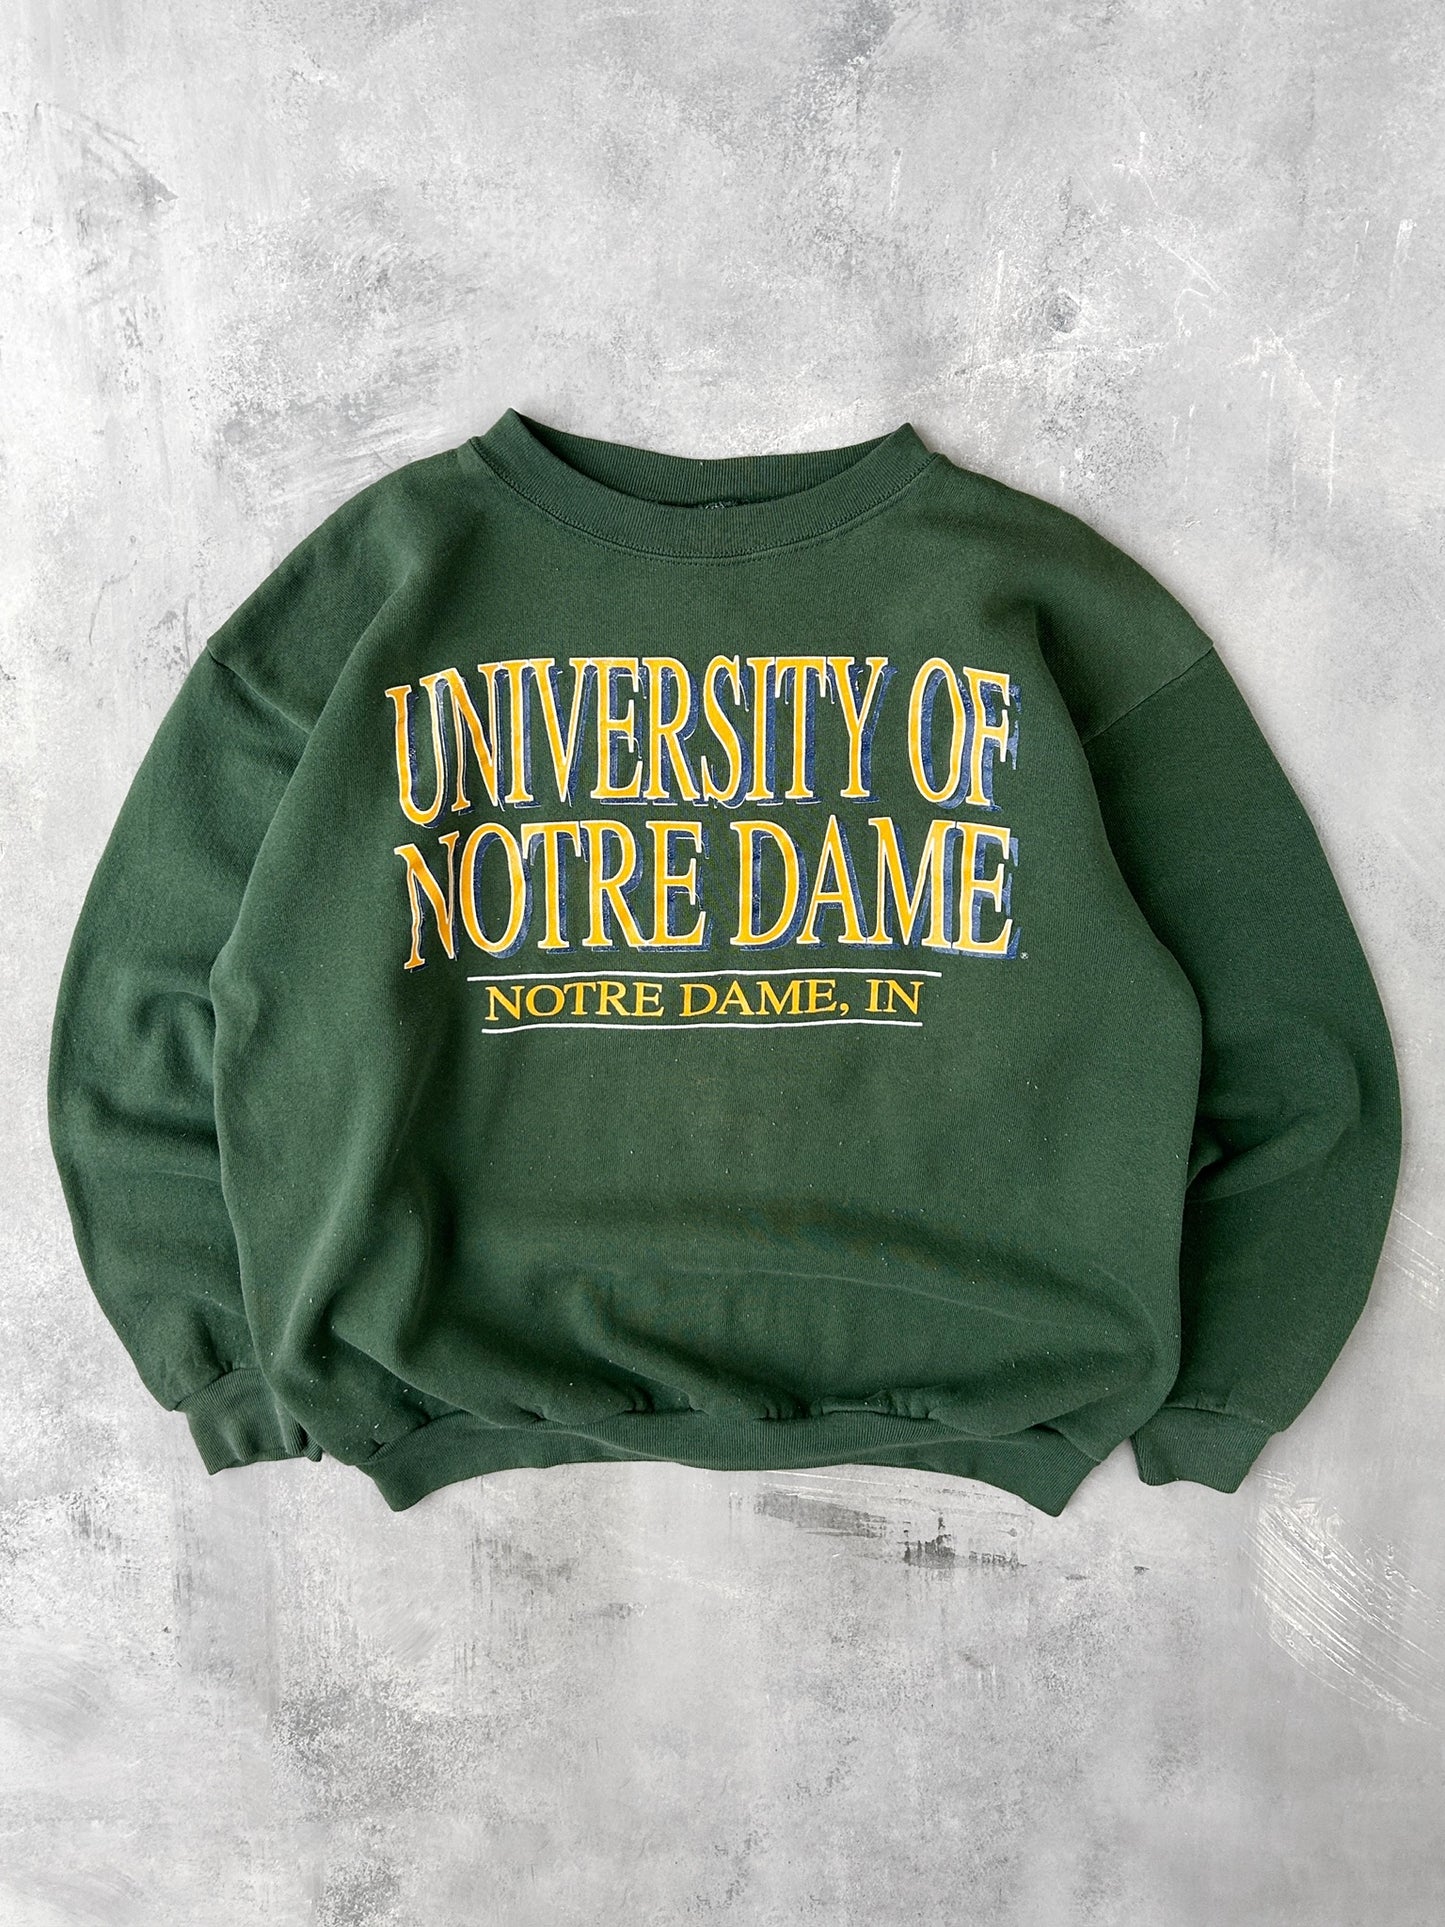 University of Notre Dame Sweatshirt 90’s - Large